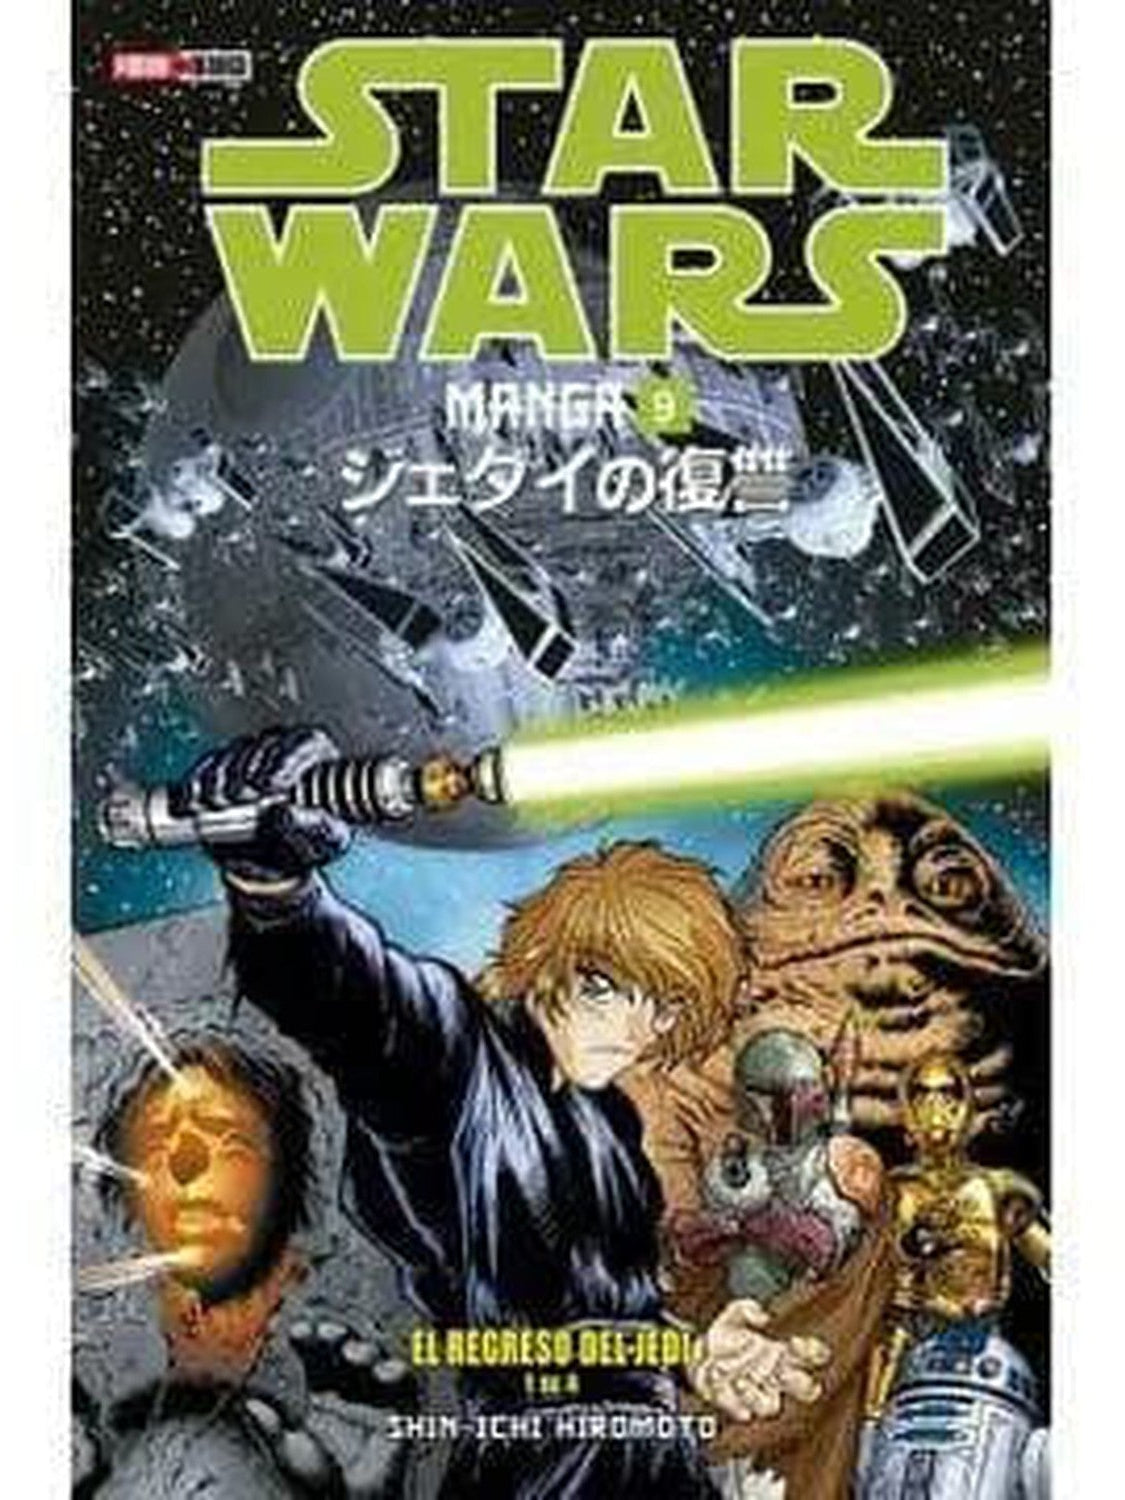 Star Wars Manga #9: El Regreso del Jedi Panini México ENcuadrocomics